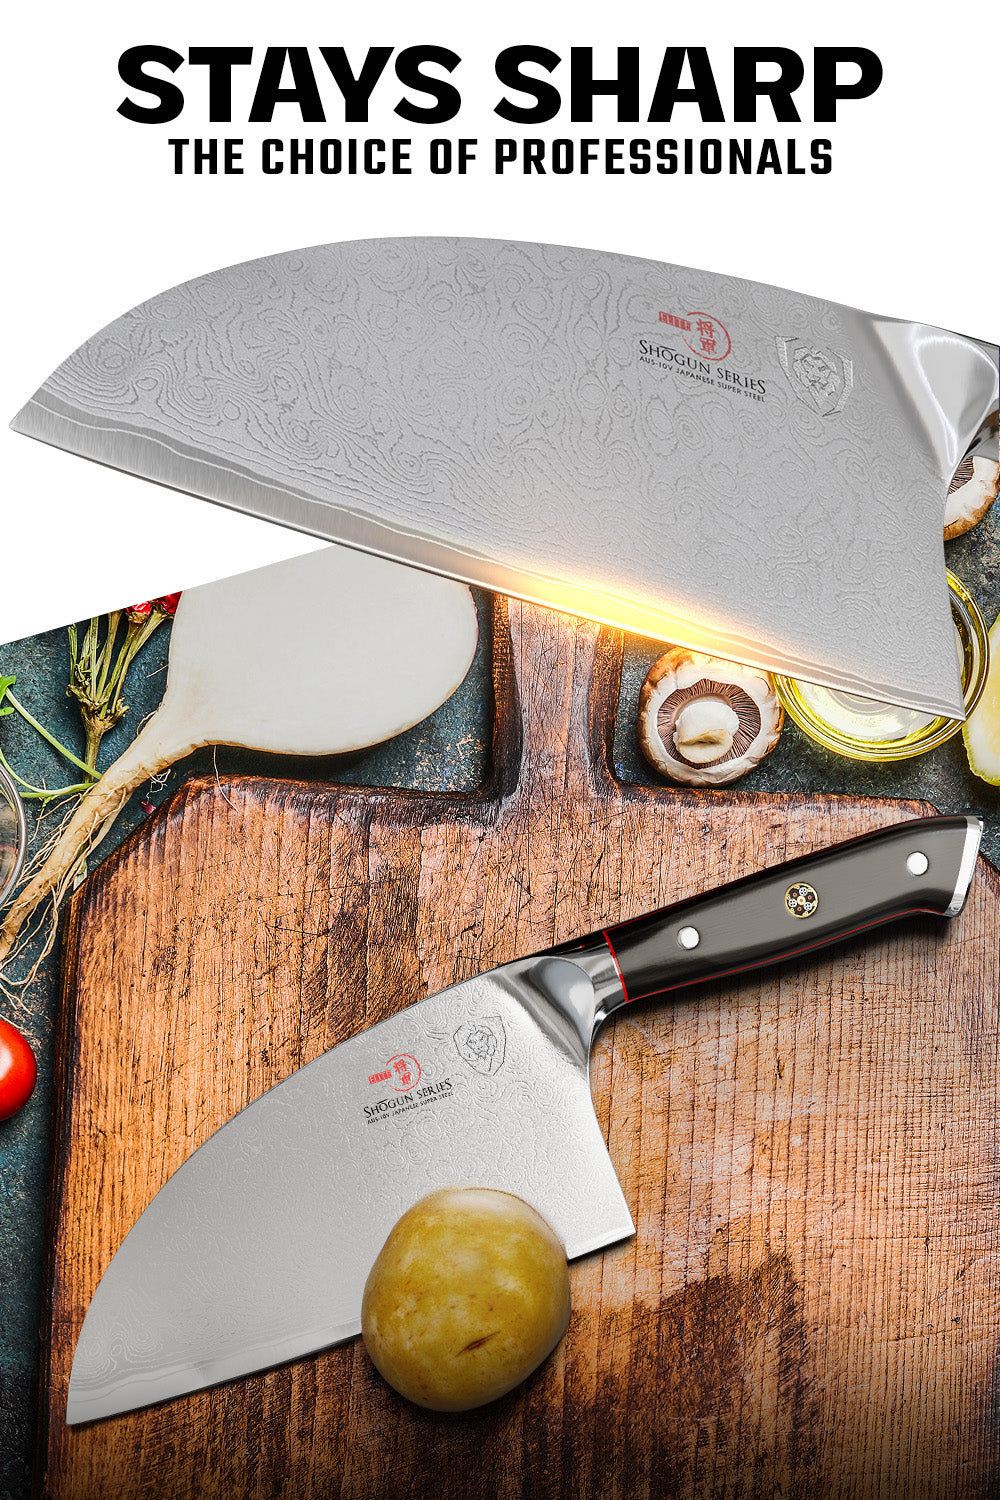 Serbian Chef's Knife 8" | Shogun Series ELITE | Dalstrong ©